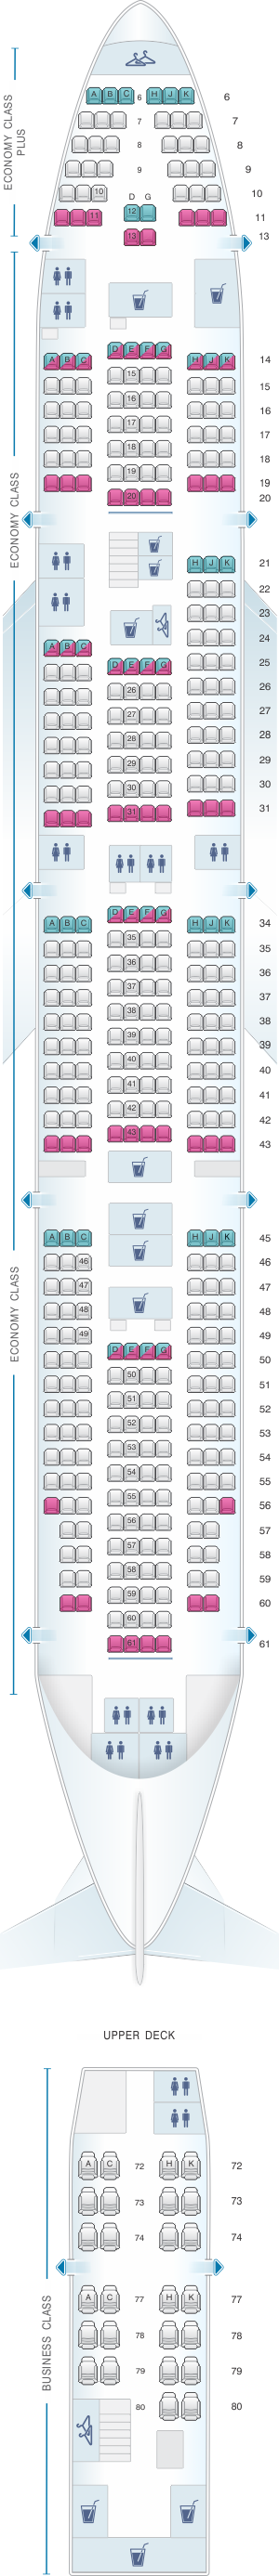 Seat map for El Al Israel Airlines Boeing B747 400 455pax